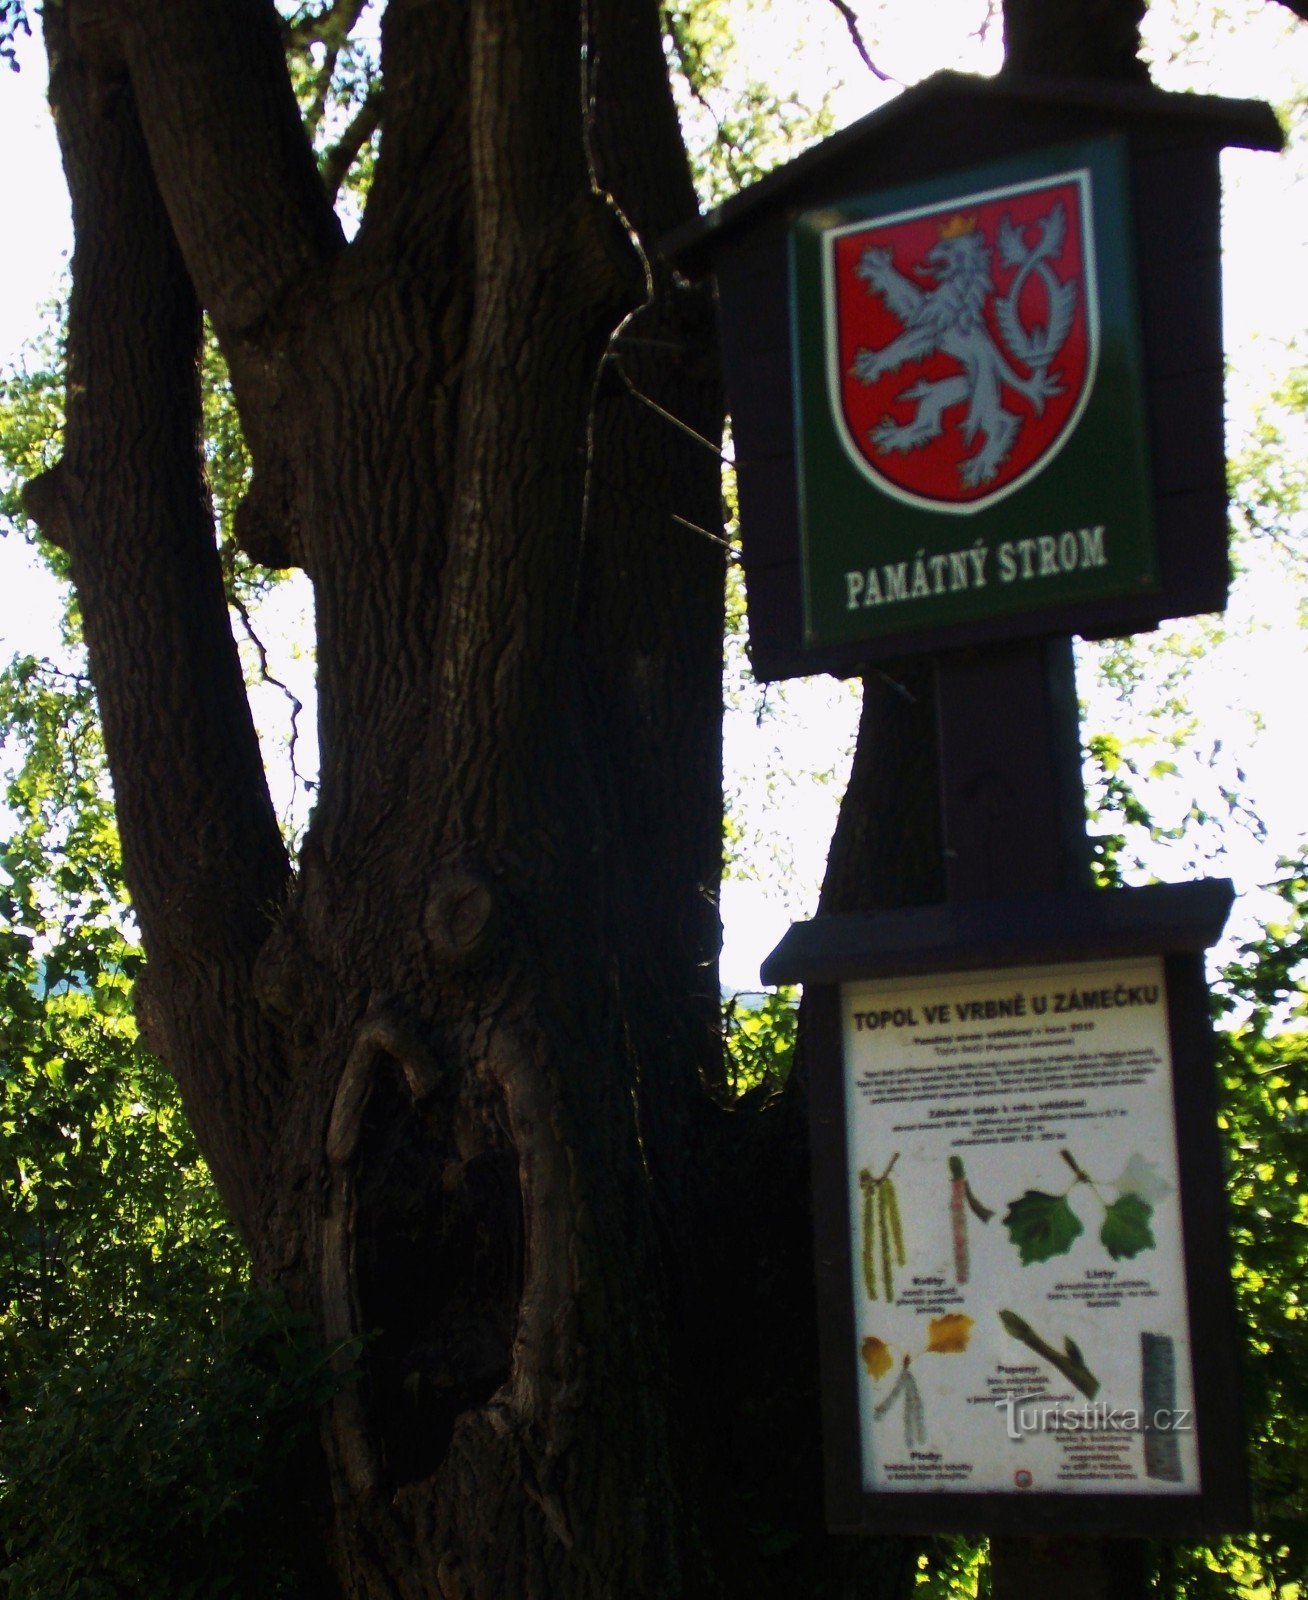 Memorial tree - Gray poplar near the Castle in Vrbno pod Pradědem